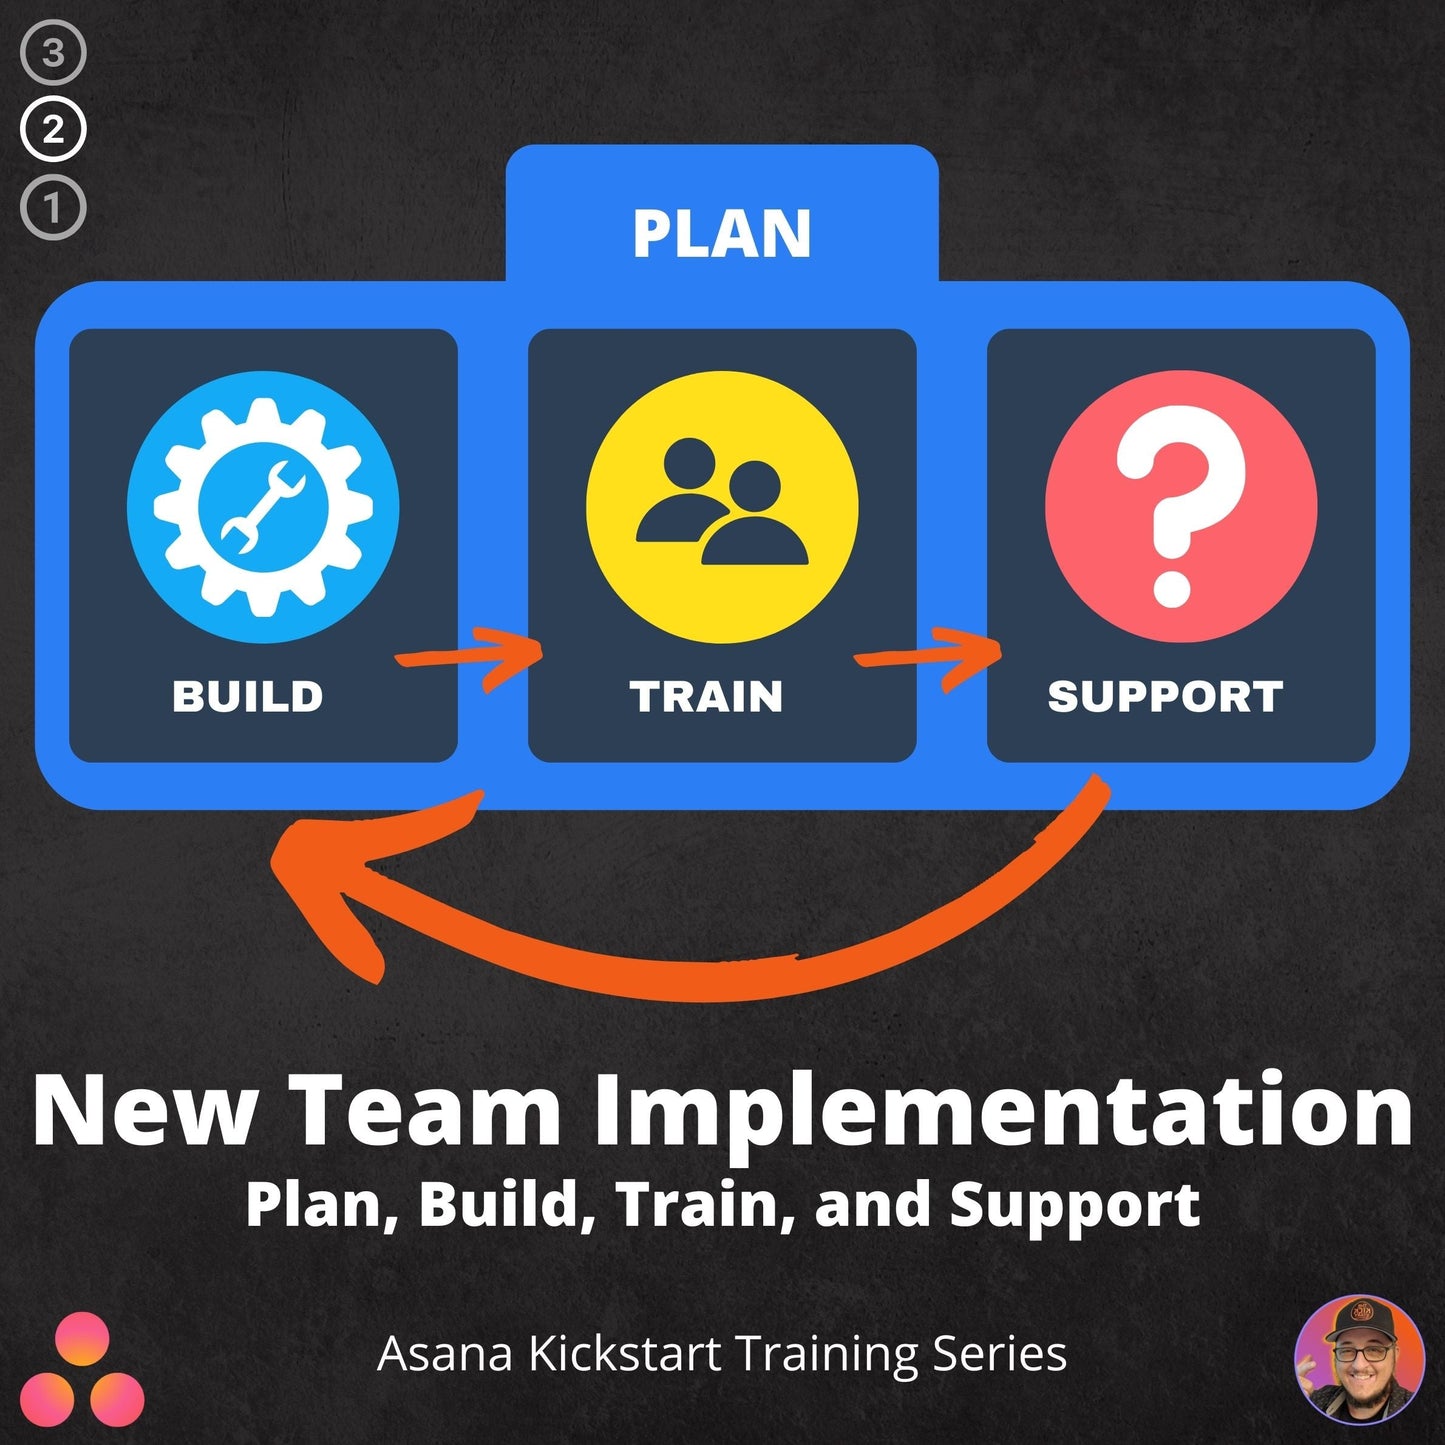 (Full-Service) Asana Implementation Lead, New Team Implementations | Asana Kickstart Services & Products v2.4.1